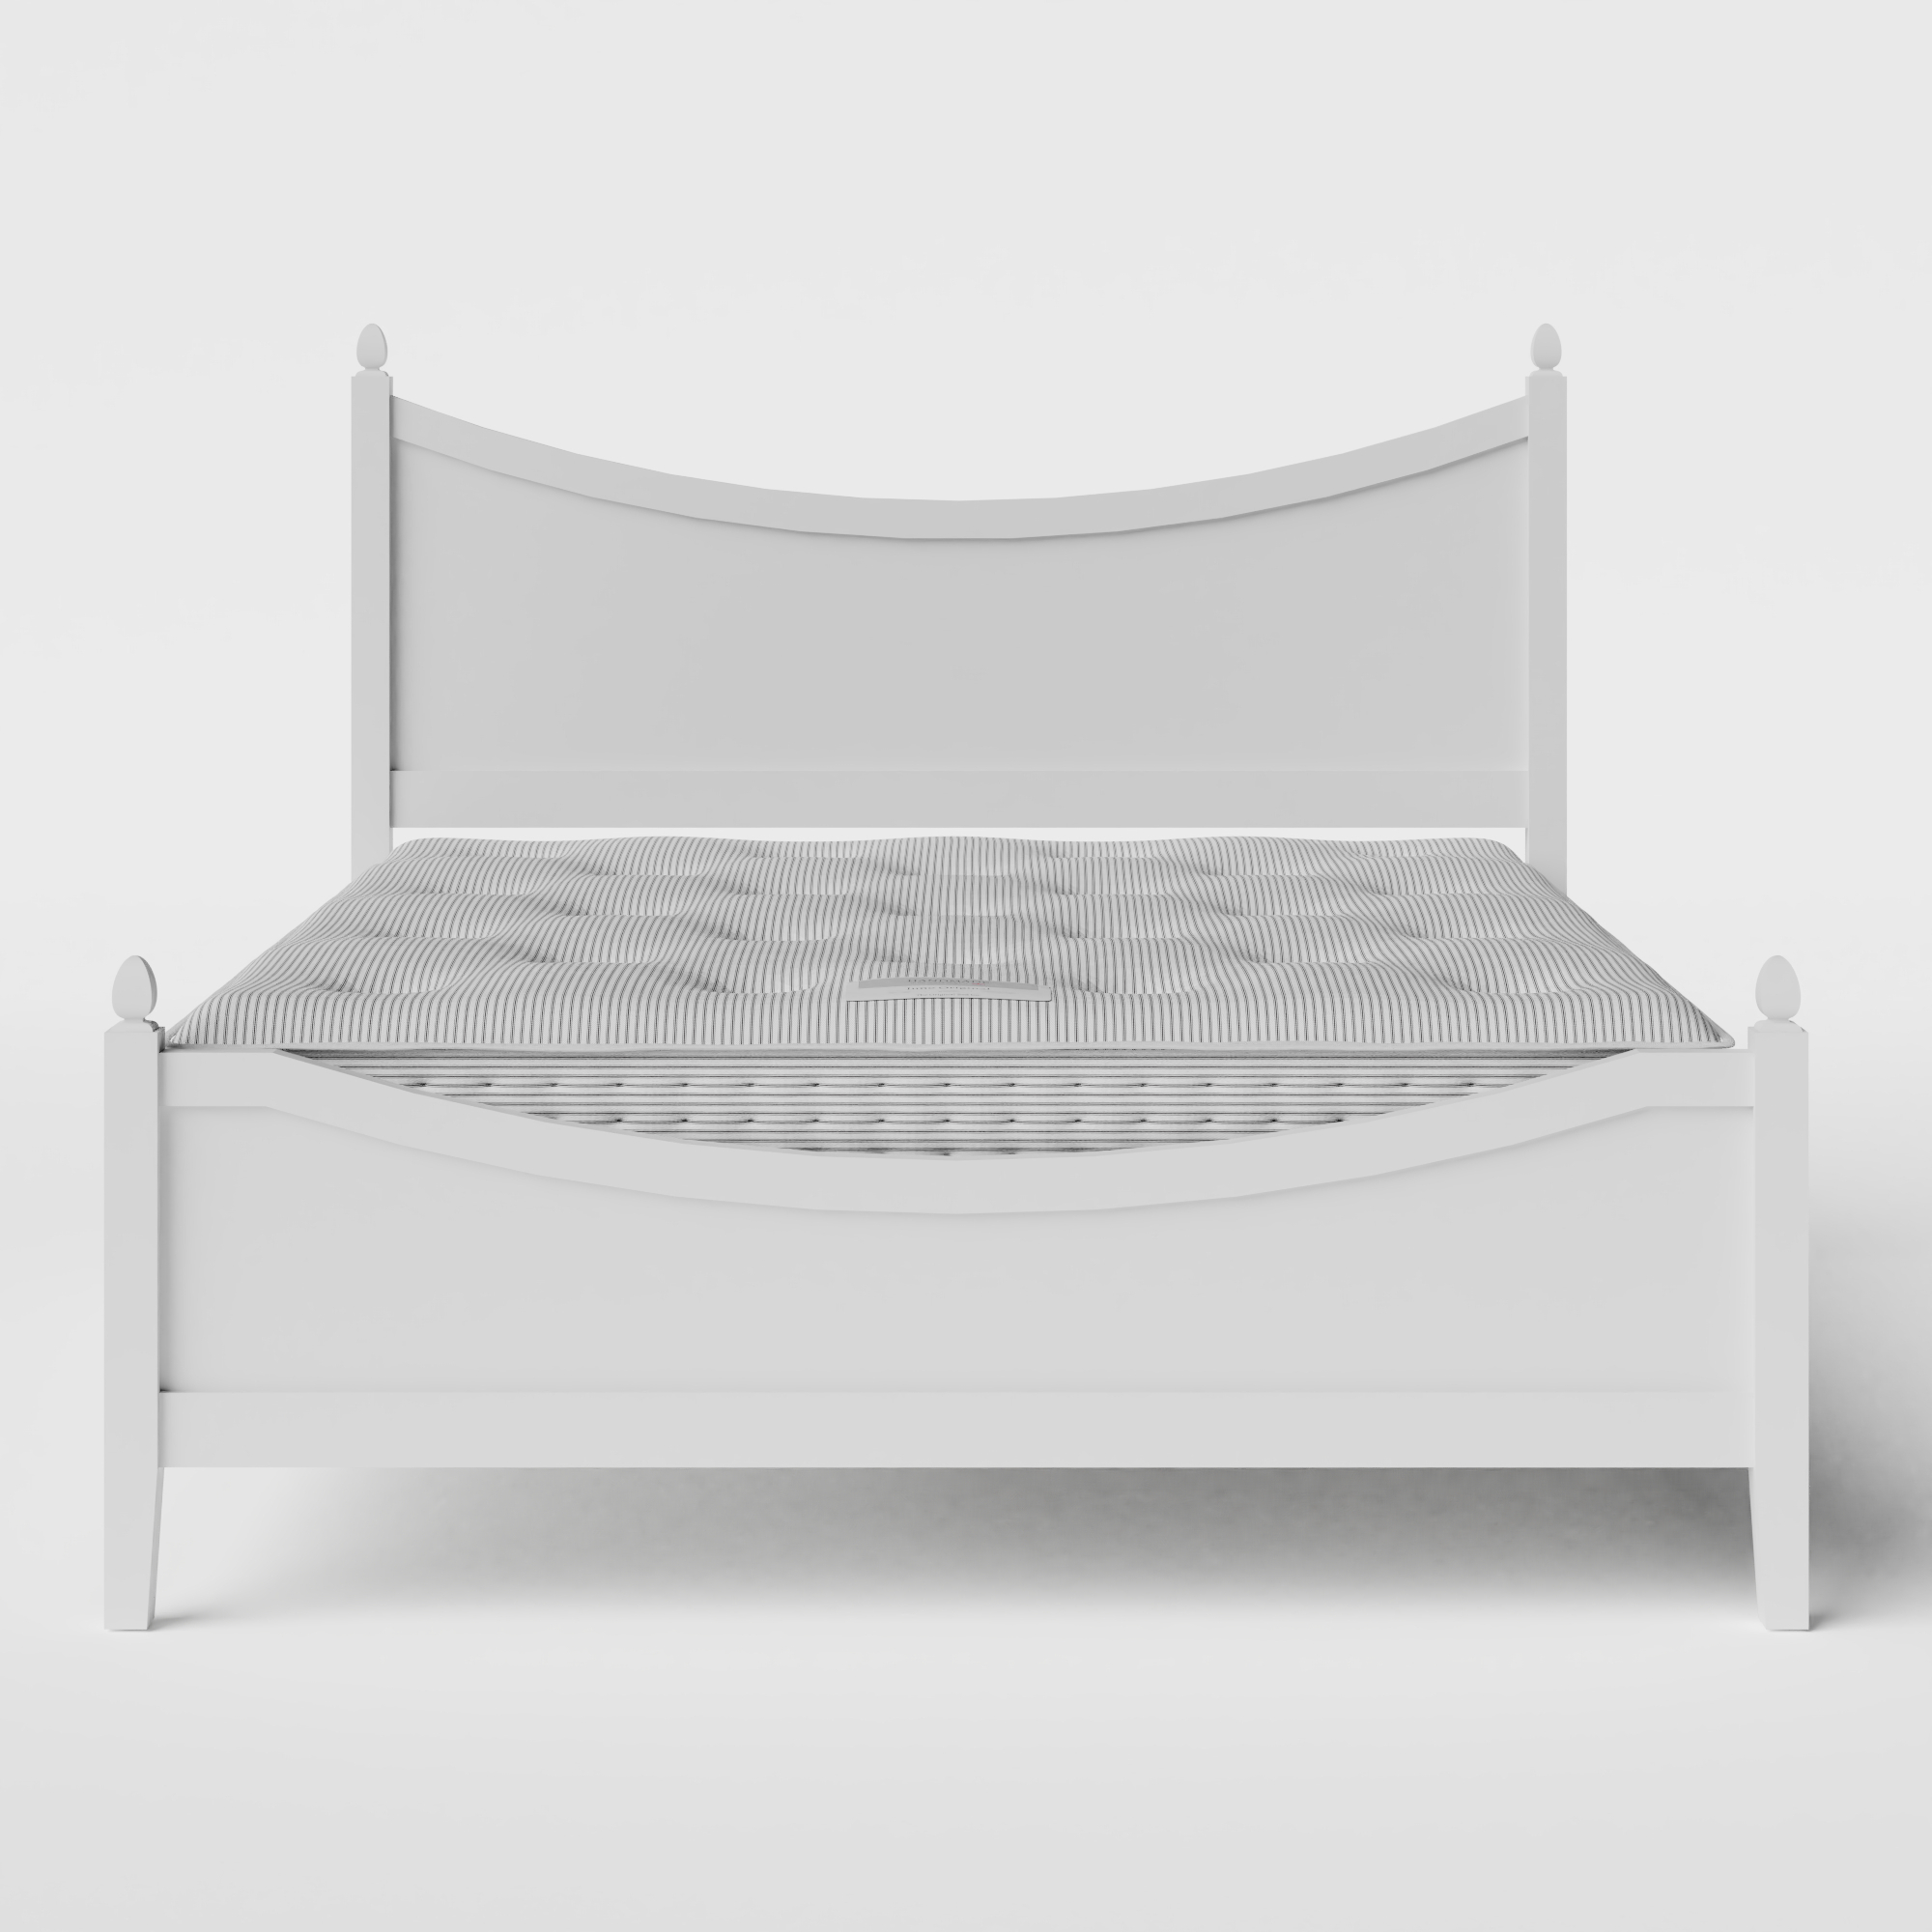 Blake Low Footend Painted letto in legno bianco con materasso